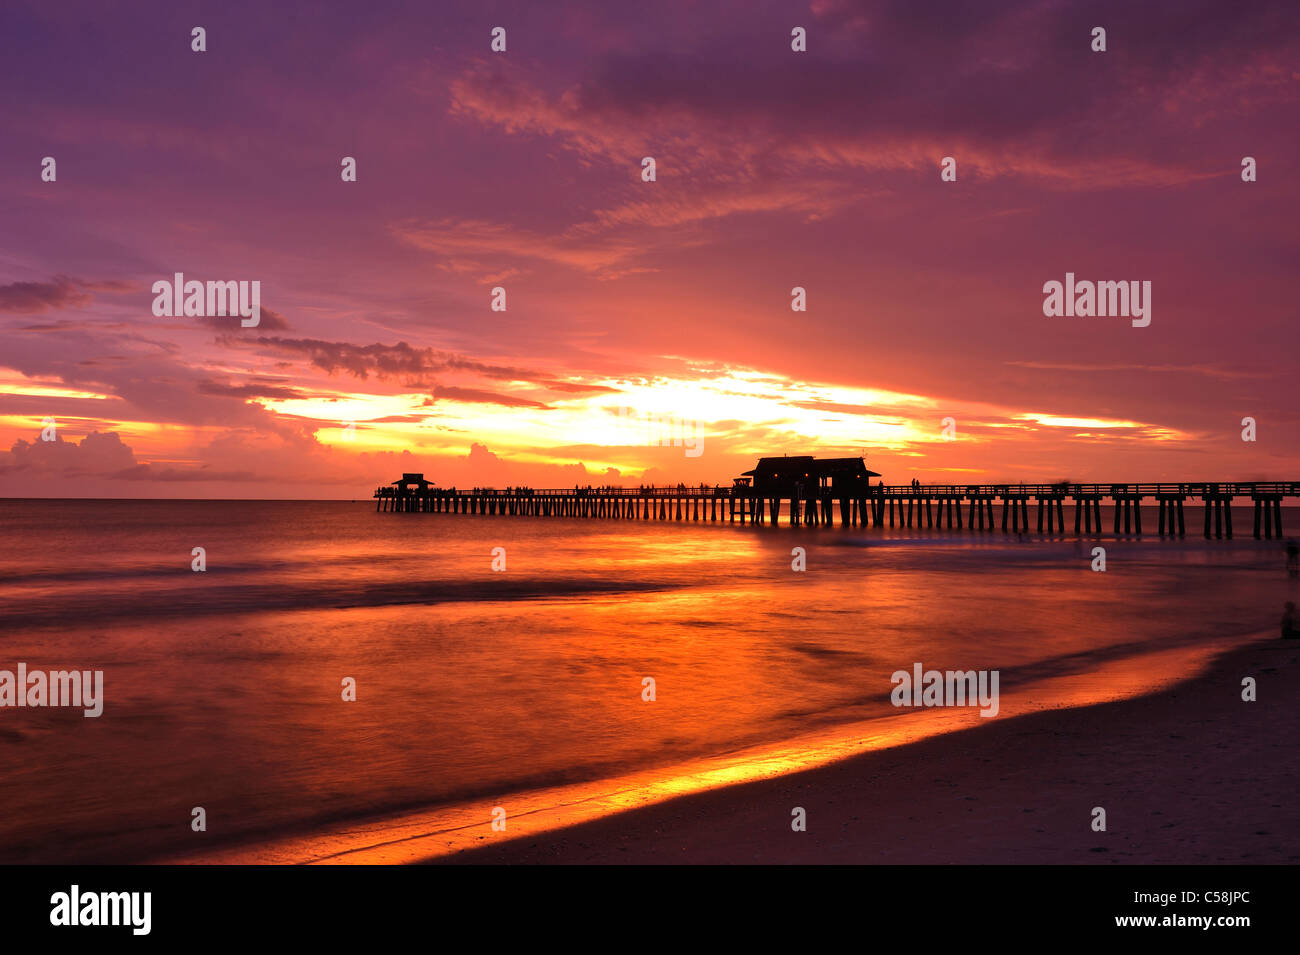 Sonnenuntergang, Naples Pier, Golf von Mexiko, Naples, Florida, USA, USA, Amerika, Pier, Meer, Wasser Stockfoto